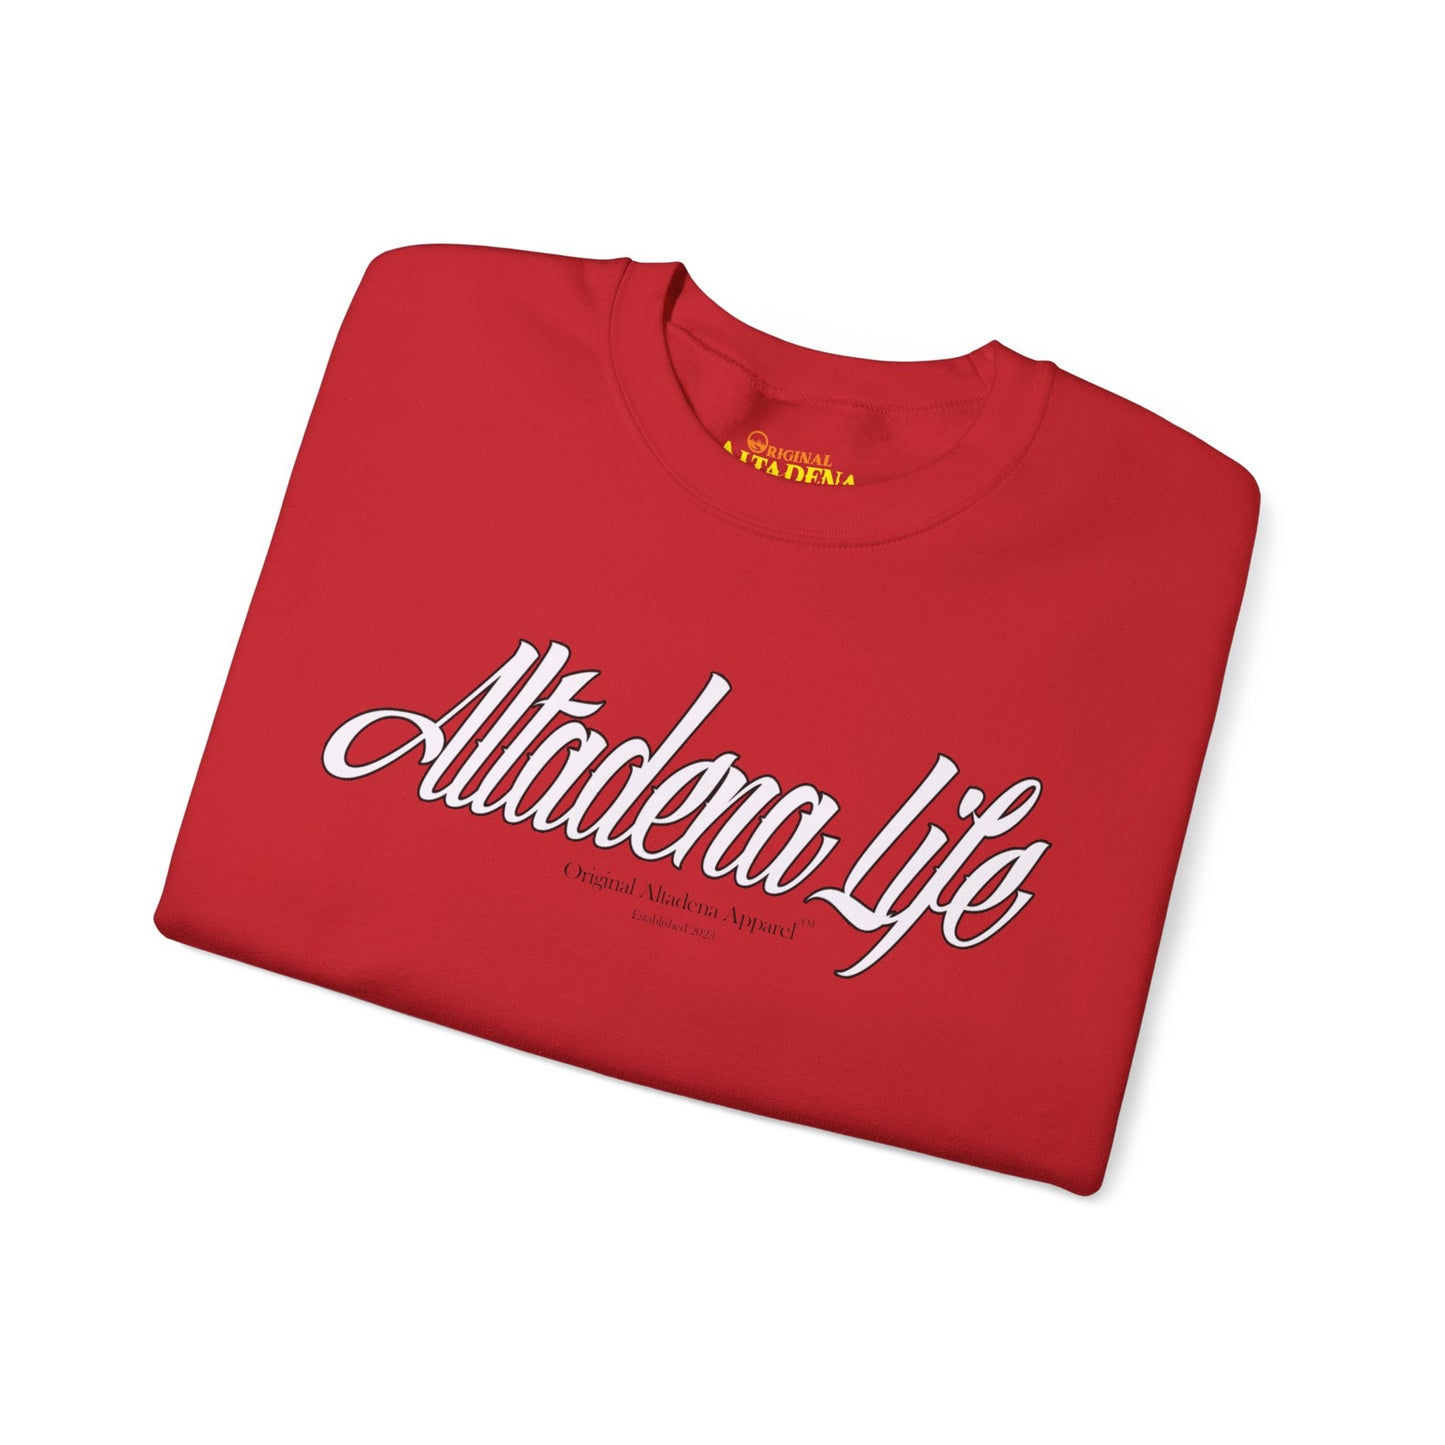 Altadena Life Heavy Blend™ Crewneck Sweatshirt